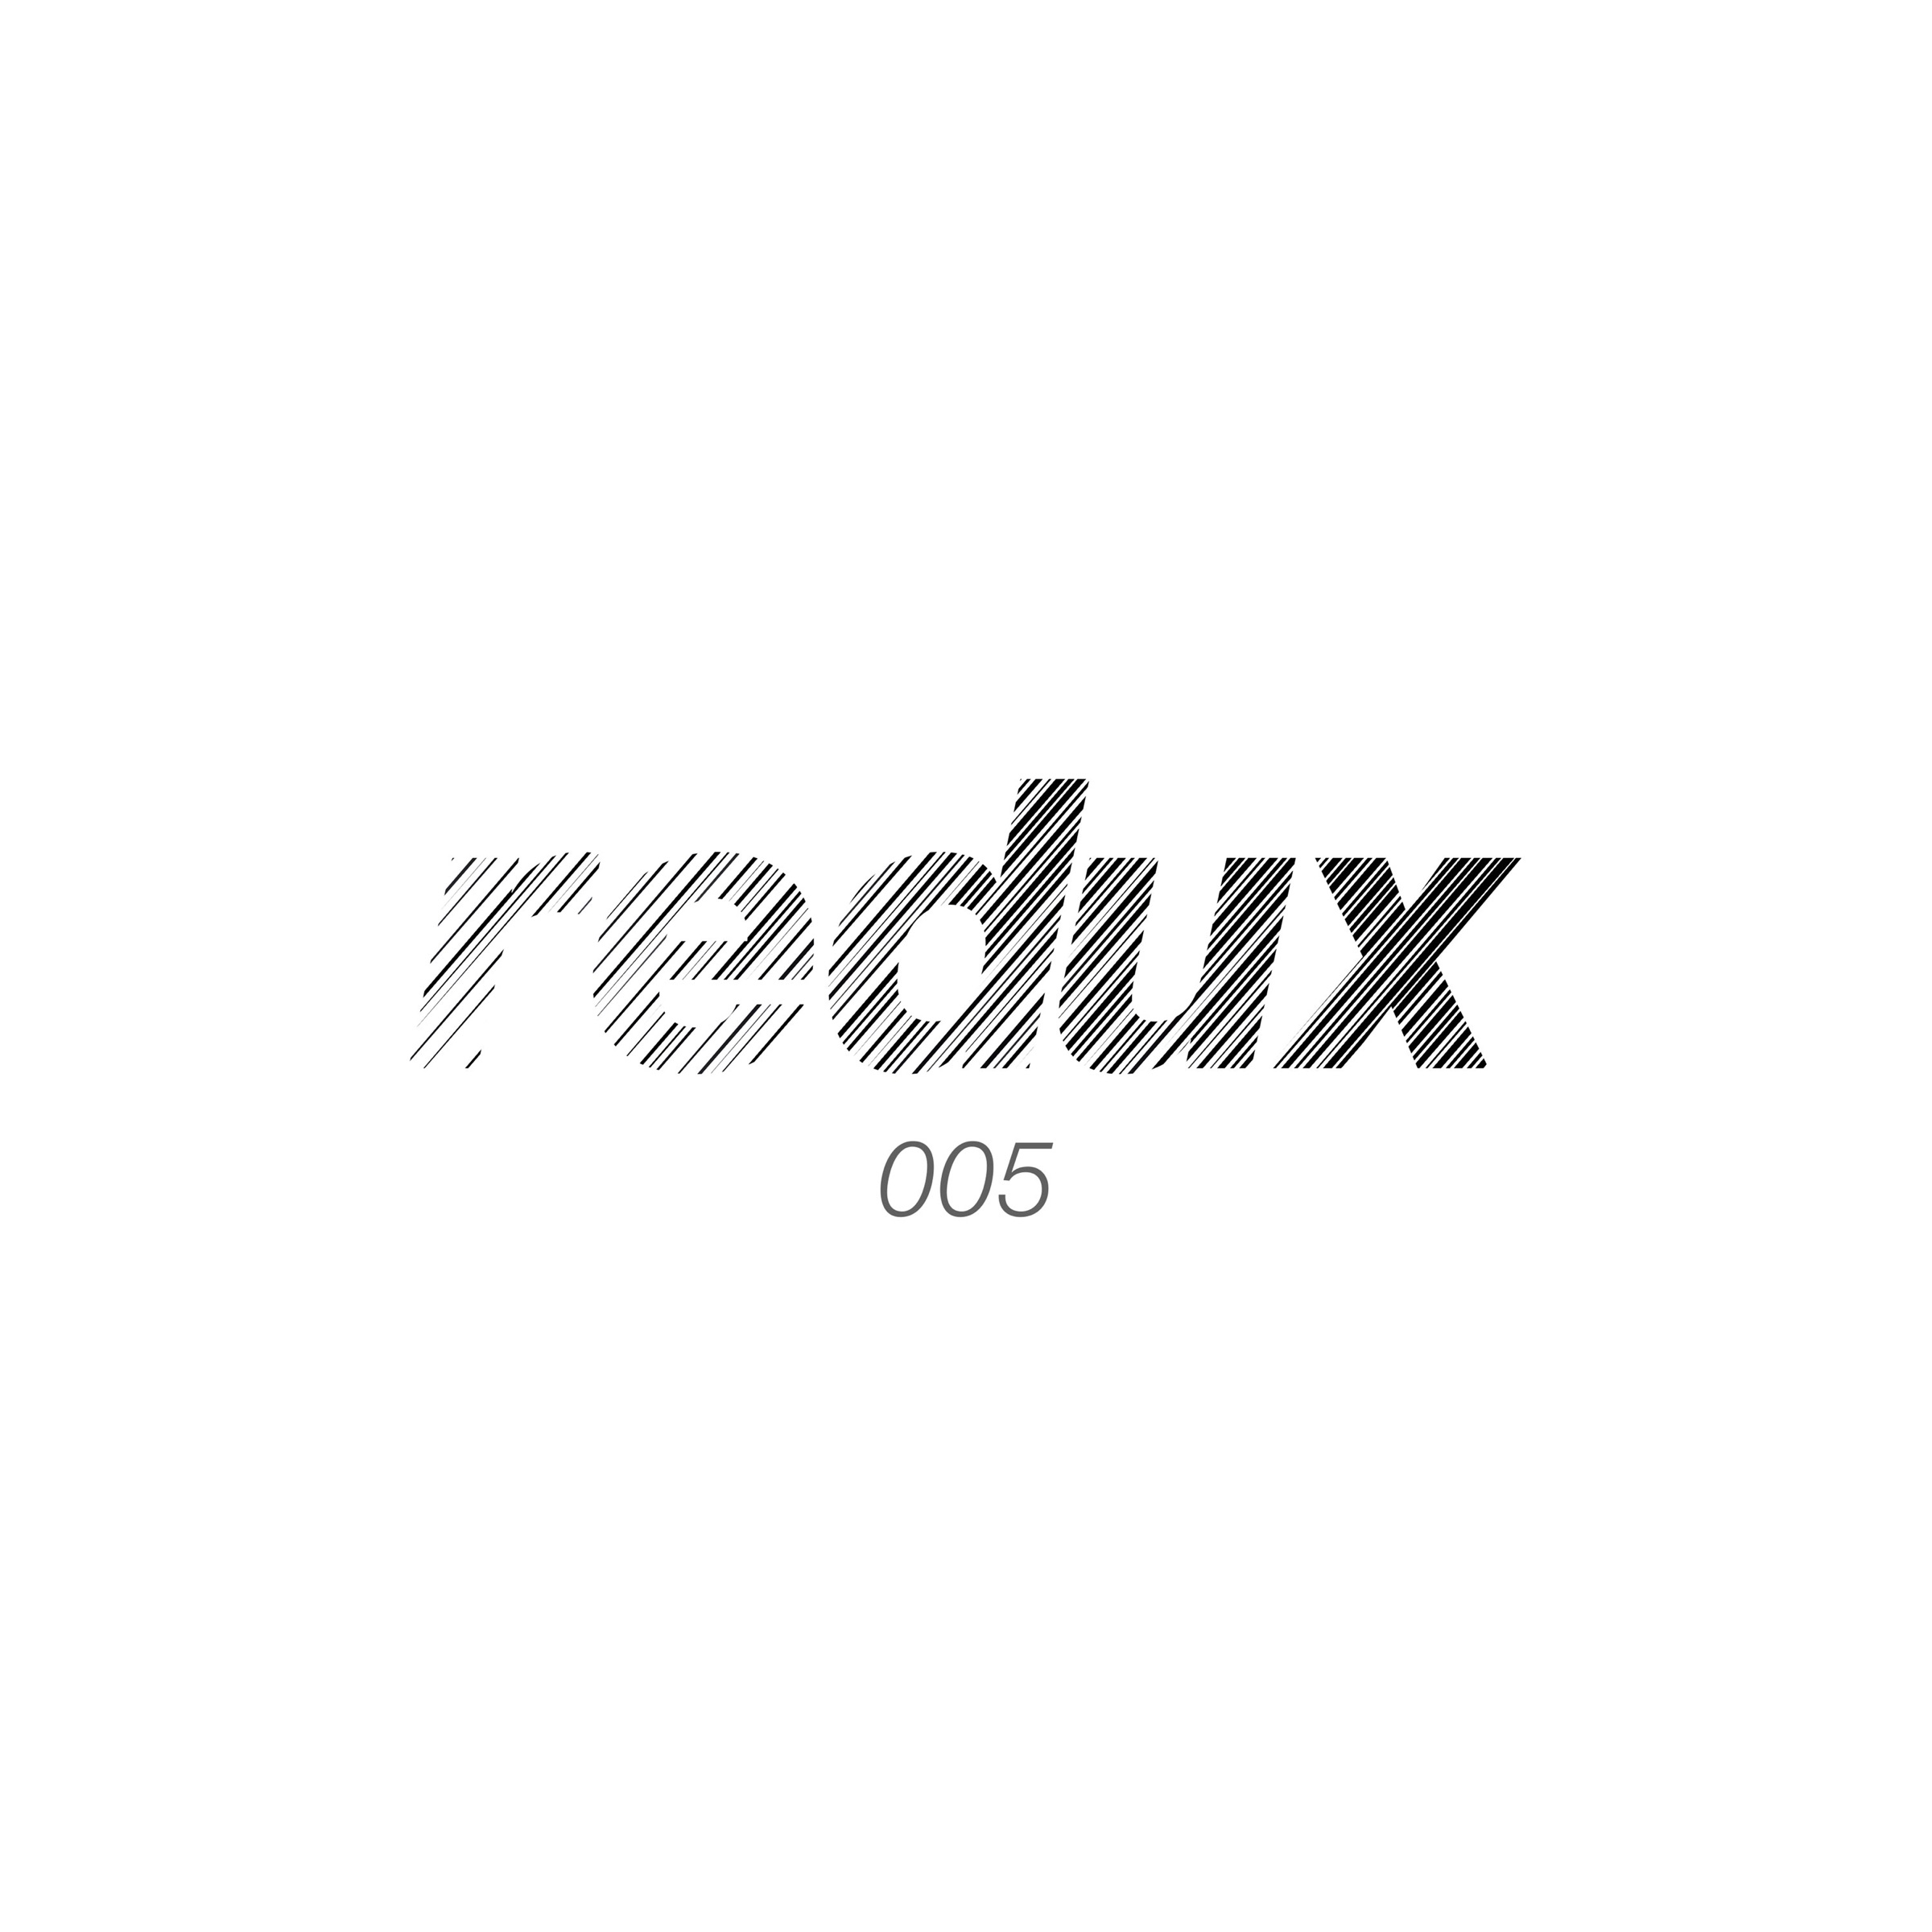 Kaskade Redux EP 005 cover artwork